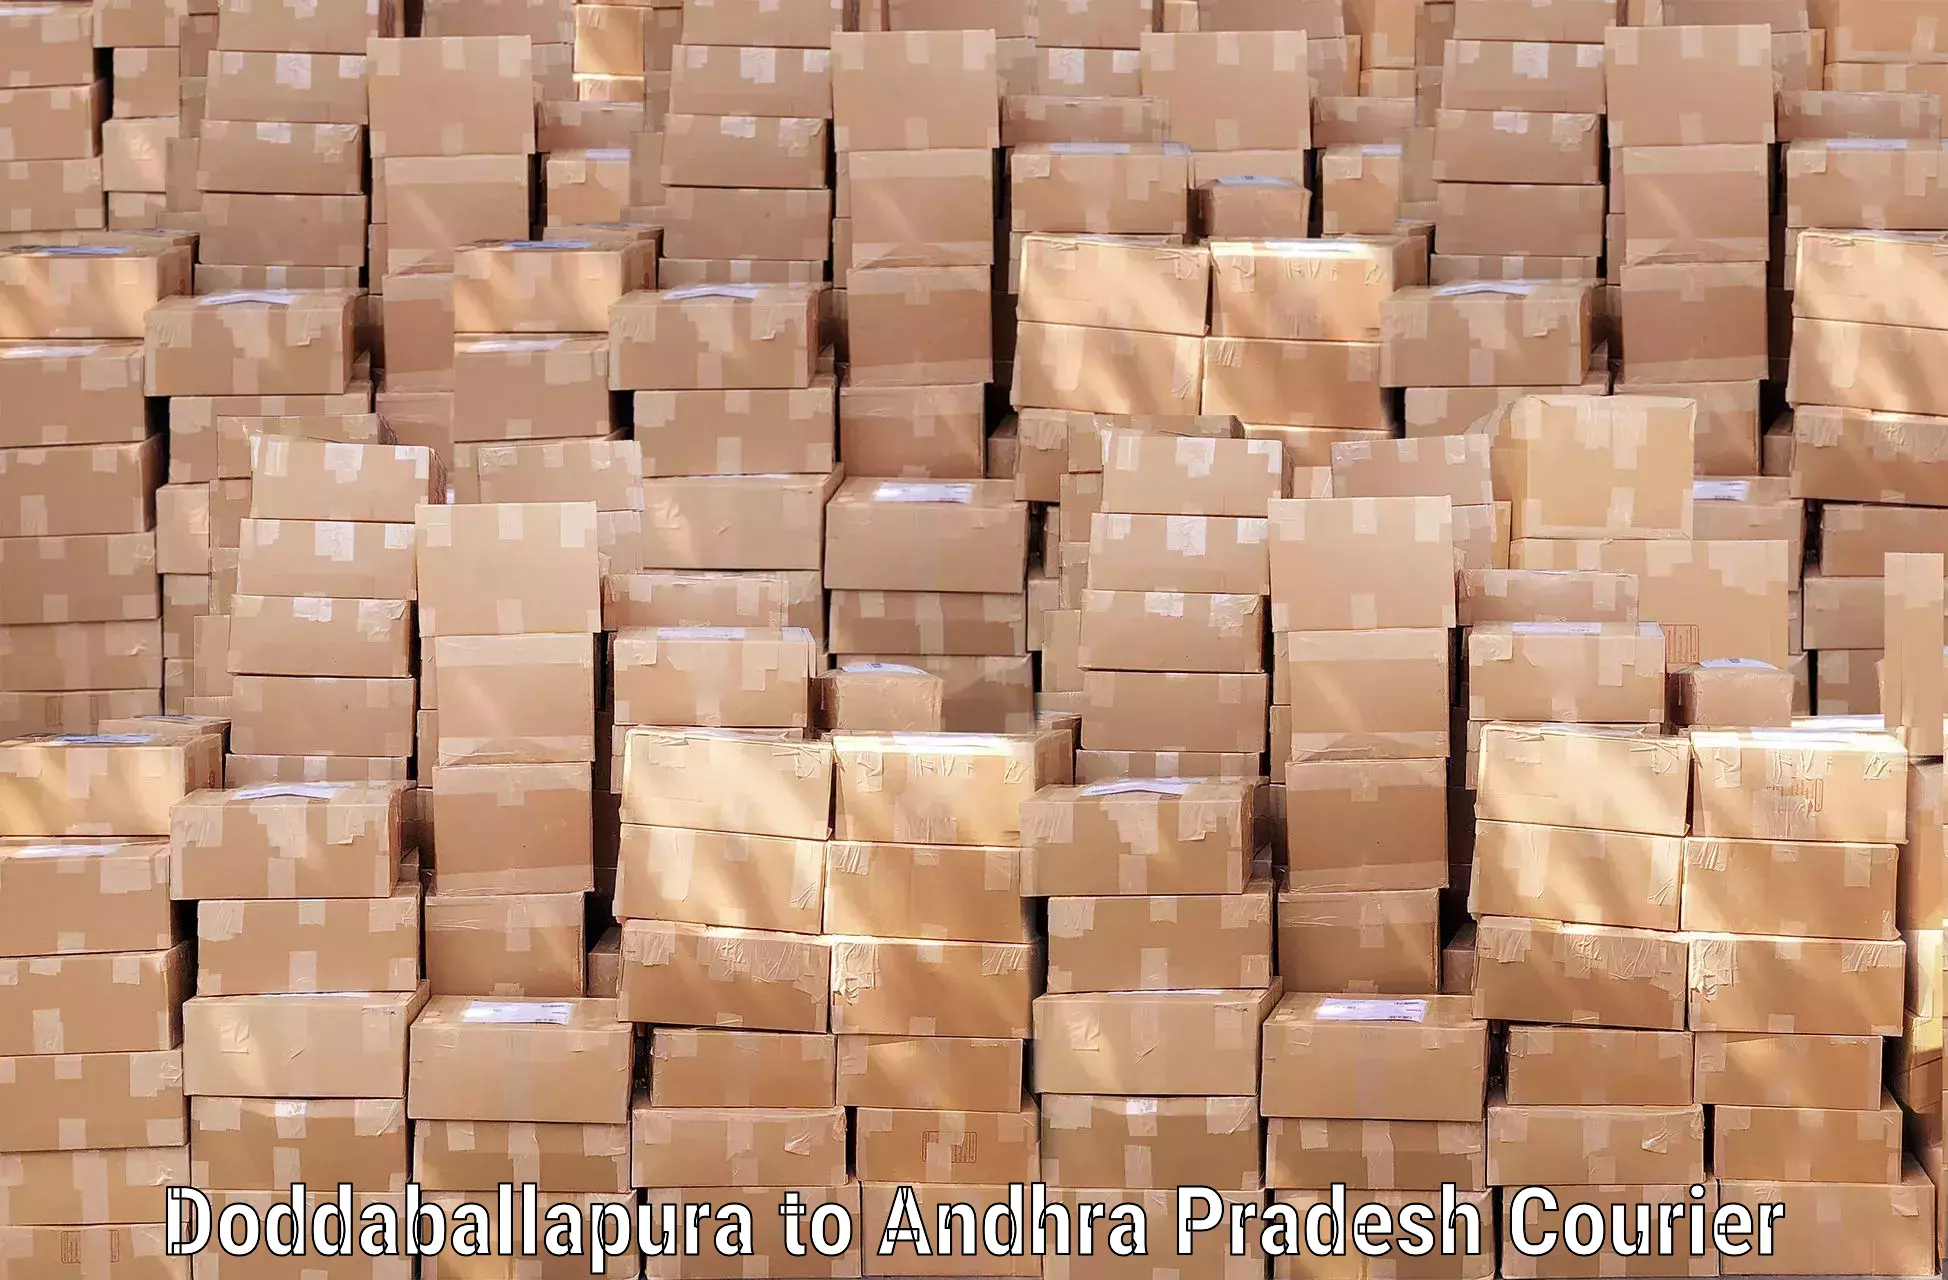 Door to door luggage delivery in Doddaballapura to Andhra Pradesh